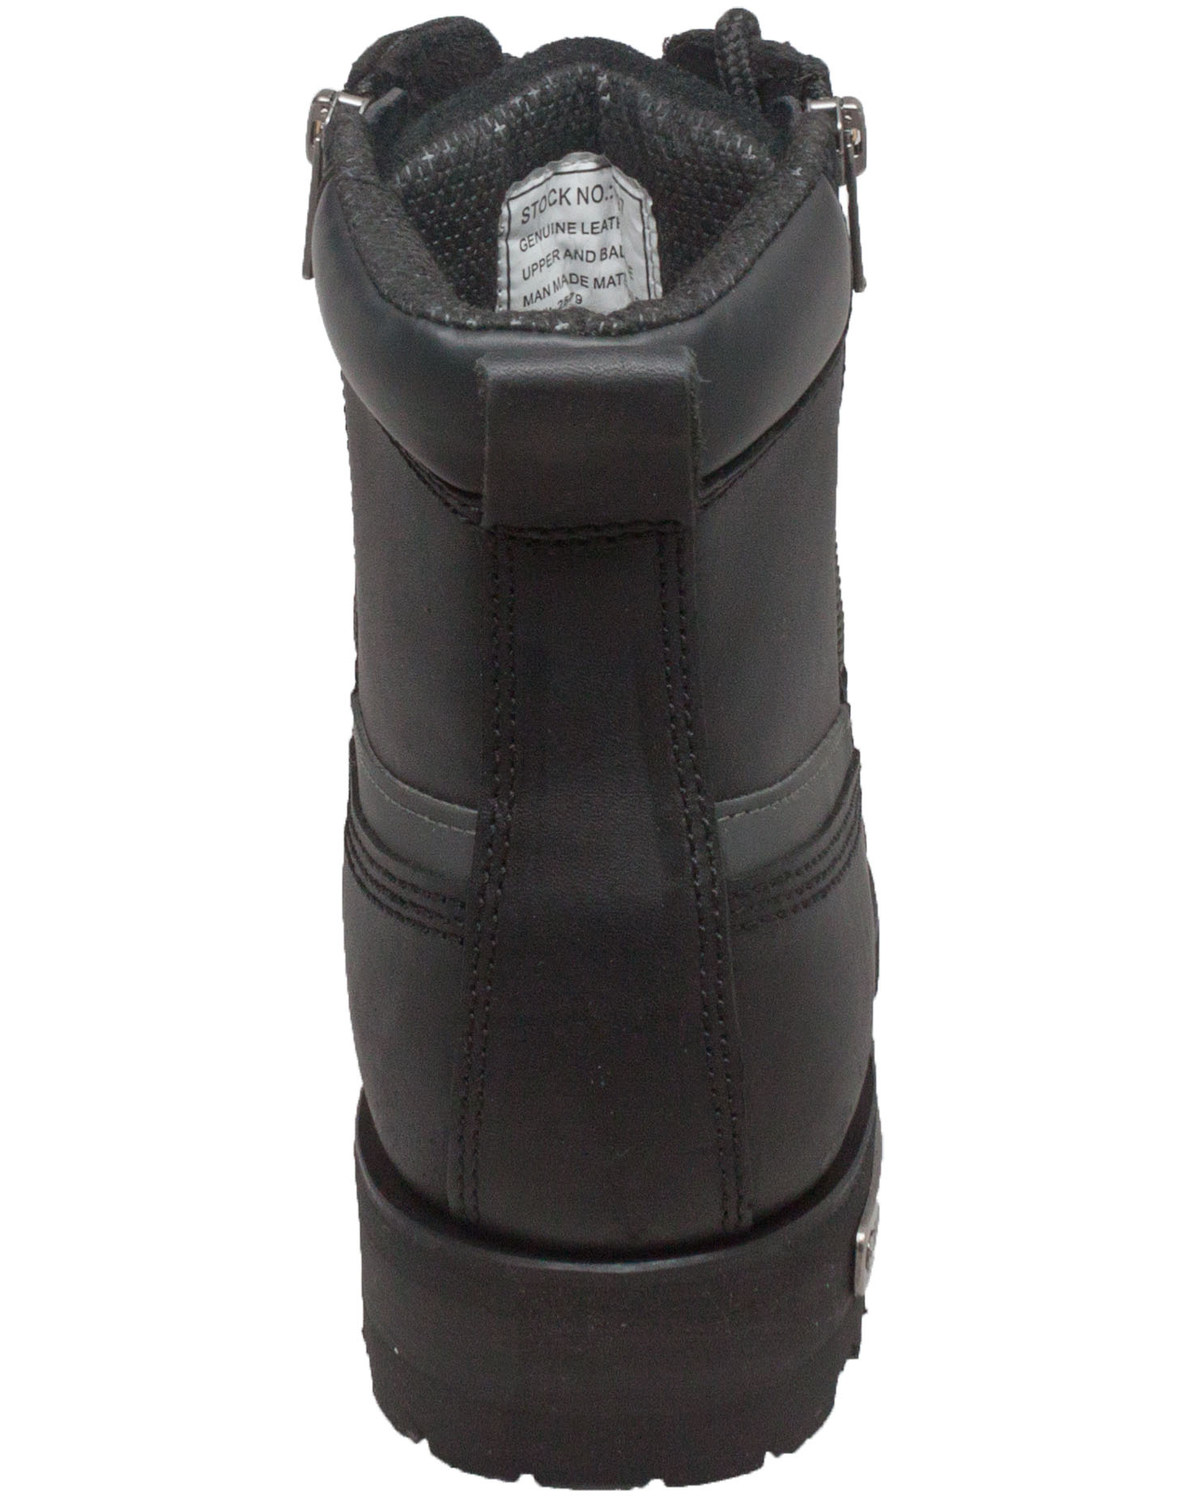 Hypard Men's 6" Reflective Double Zipper Biker Black Boot Size in 9.5, W - image 3 of 5